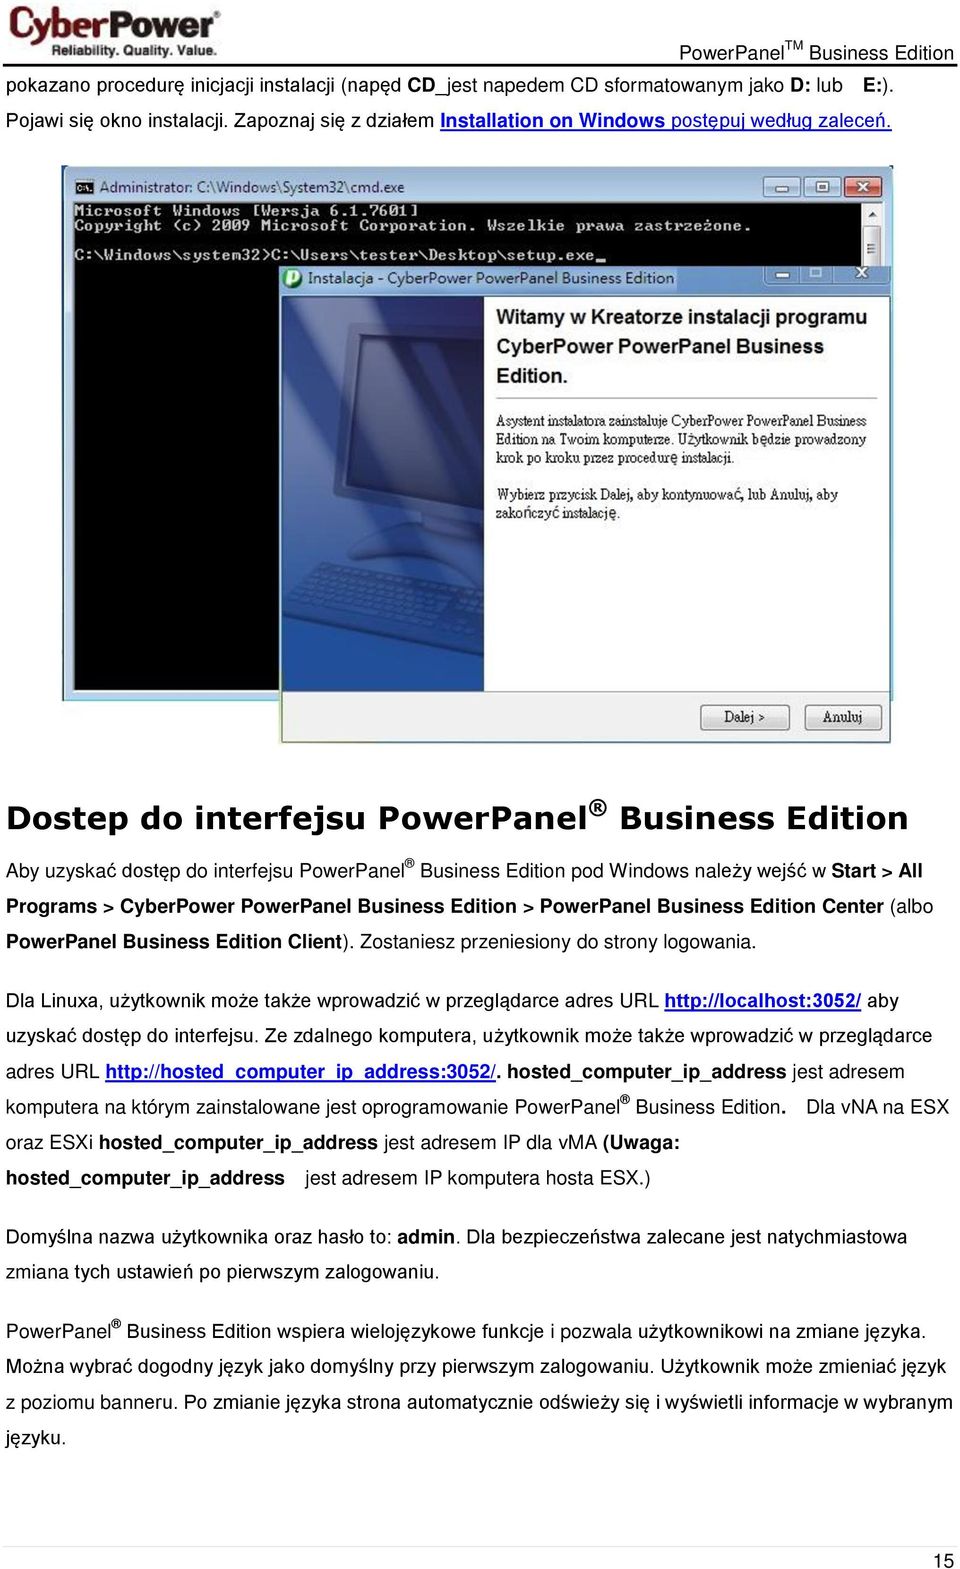 > PowerPanel Business Edition Center (albo PowerPanel Business Edition Client). Zostaniesz przeniesiony do strony logowania.